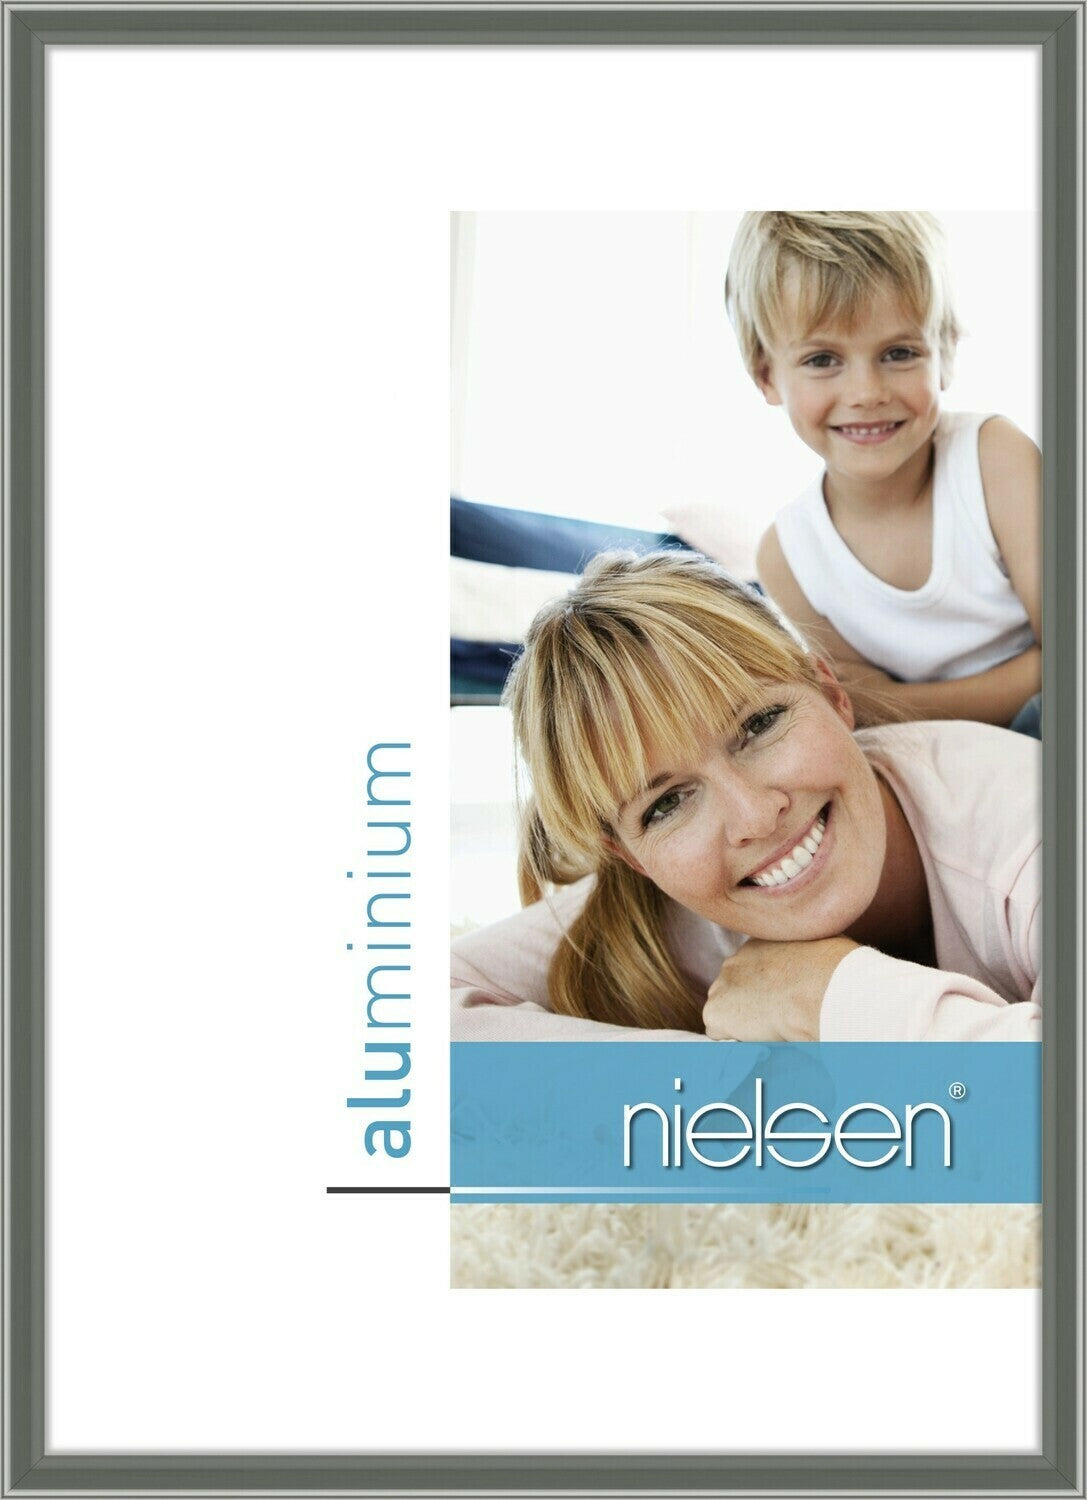 15 x 20cm | Classic Nielsen Frames